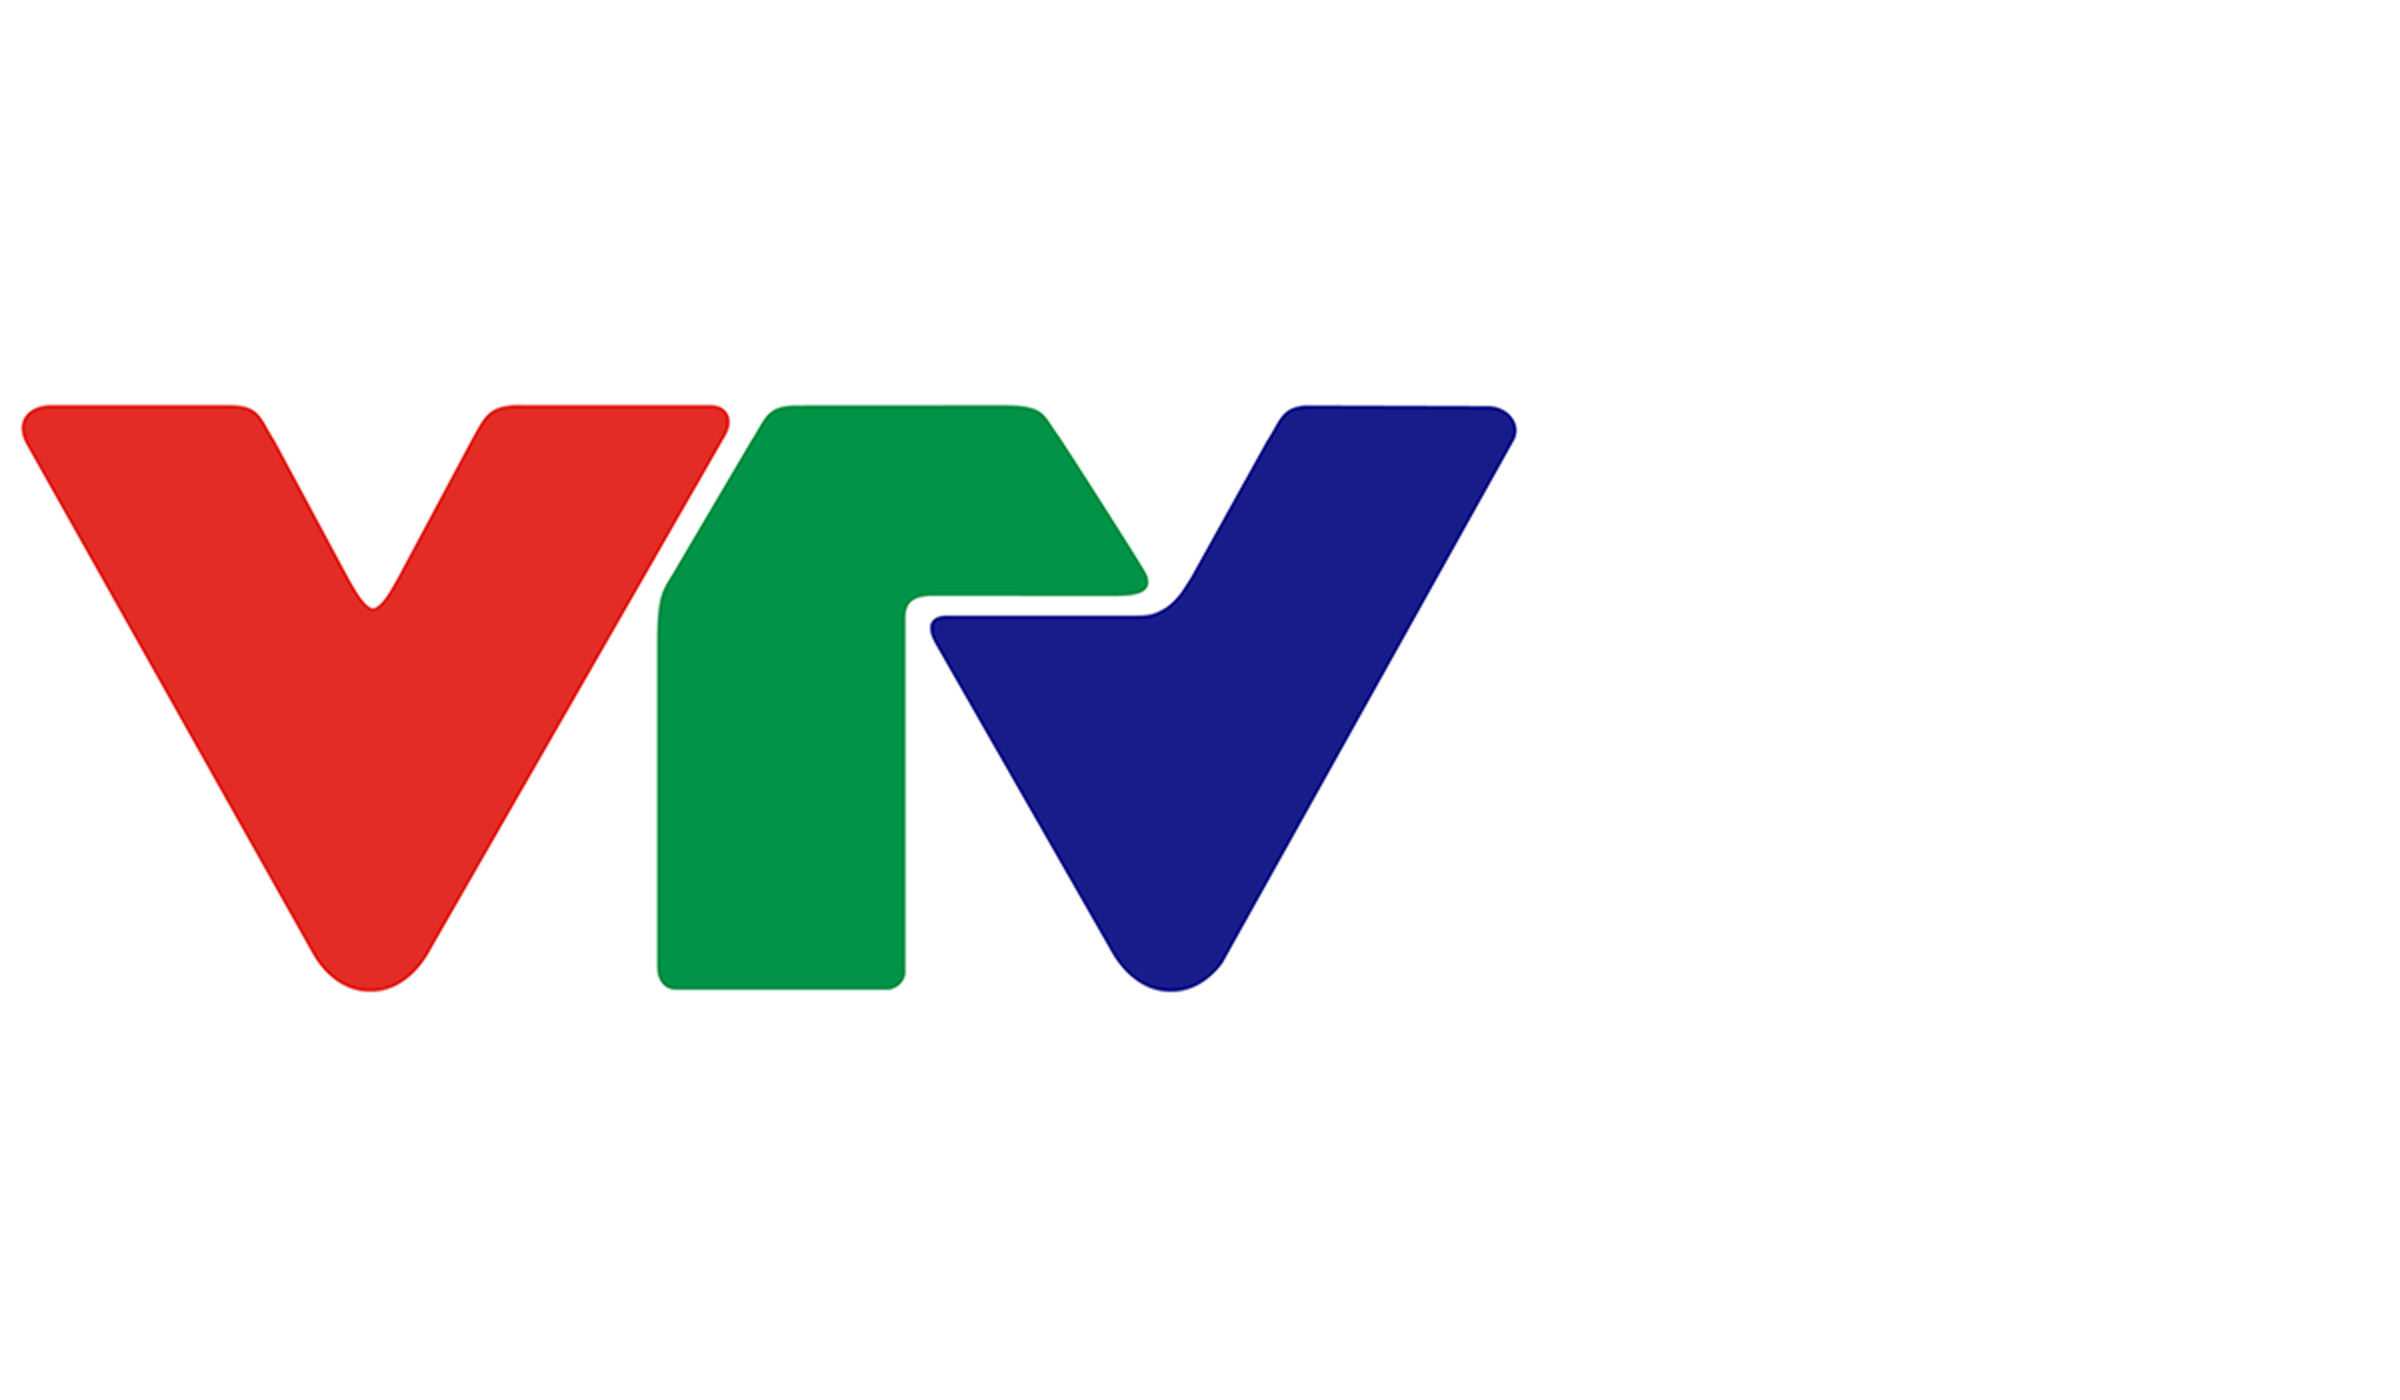 VTVCab